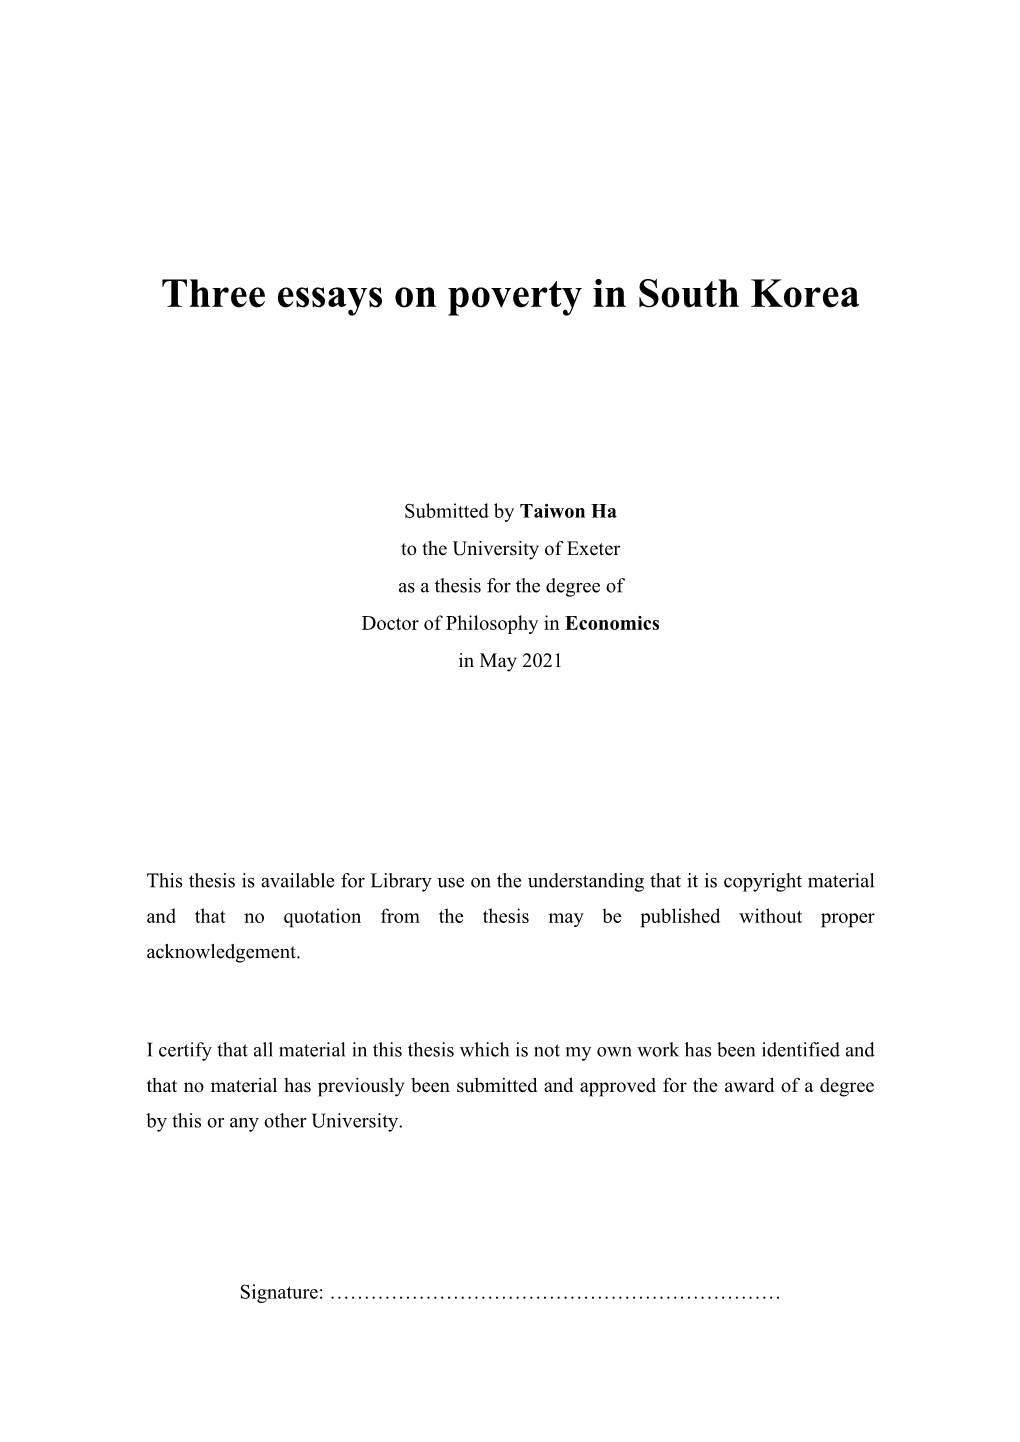 Three Essays on Poverty in South Korea